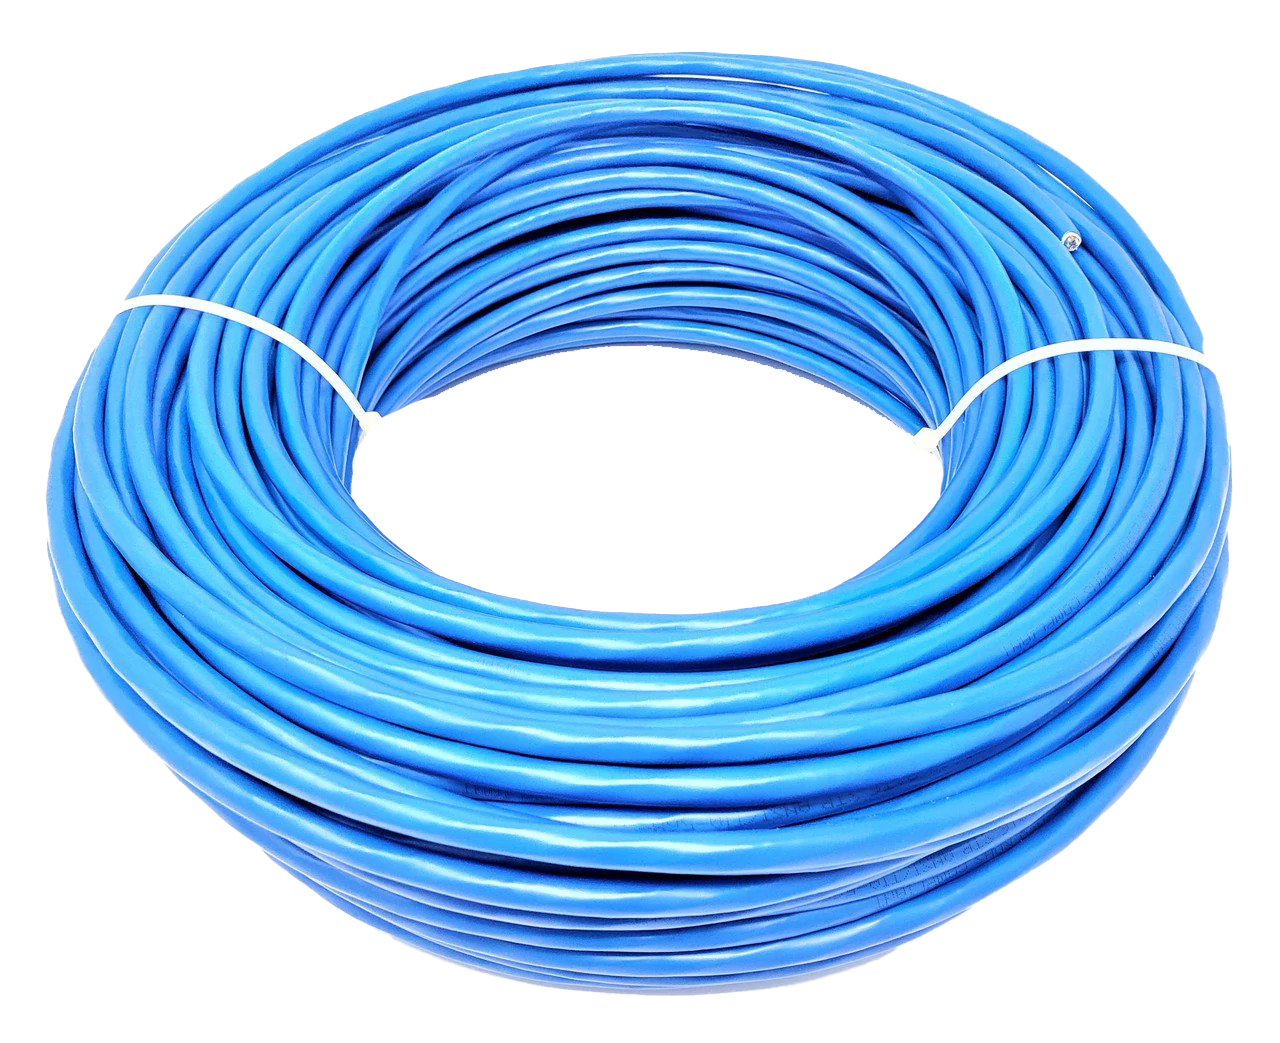 Blue Ethernet Cable Transparent Image